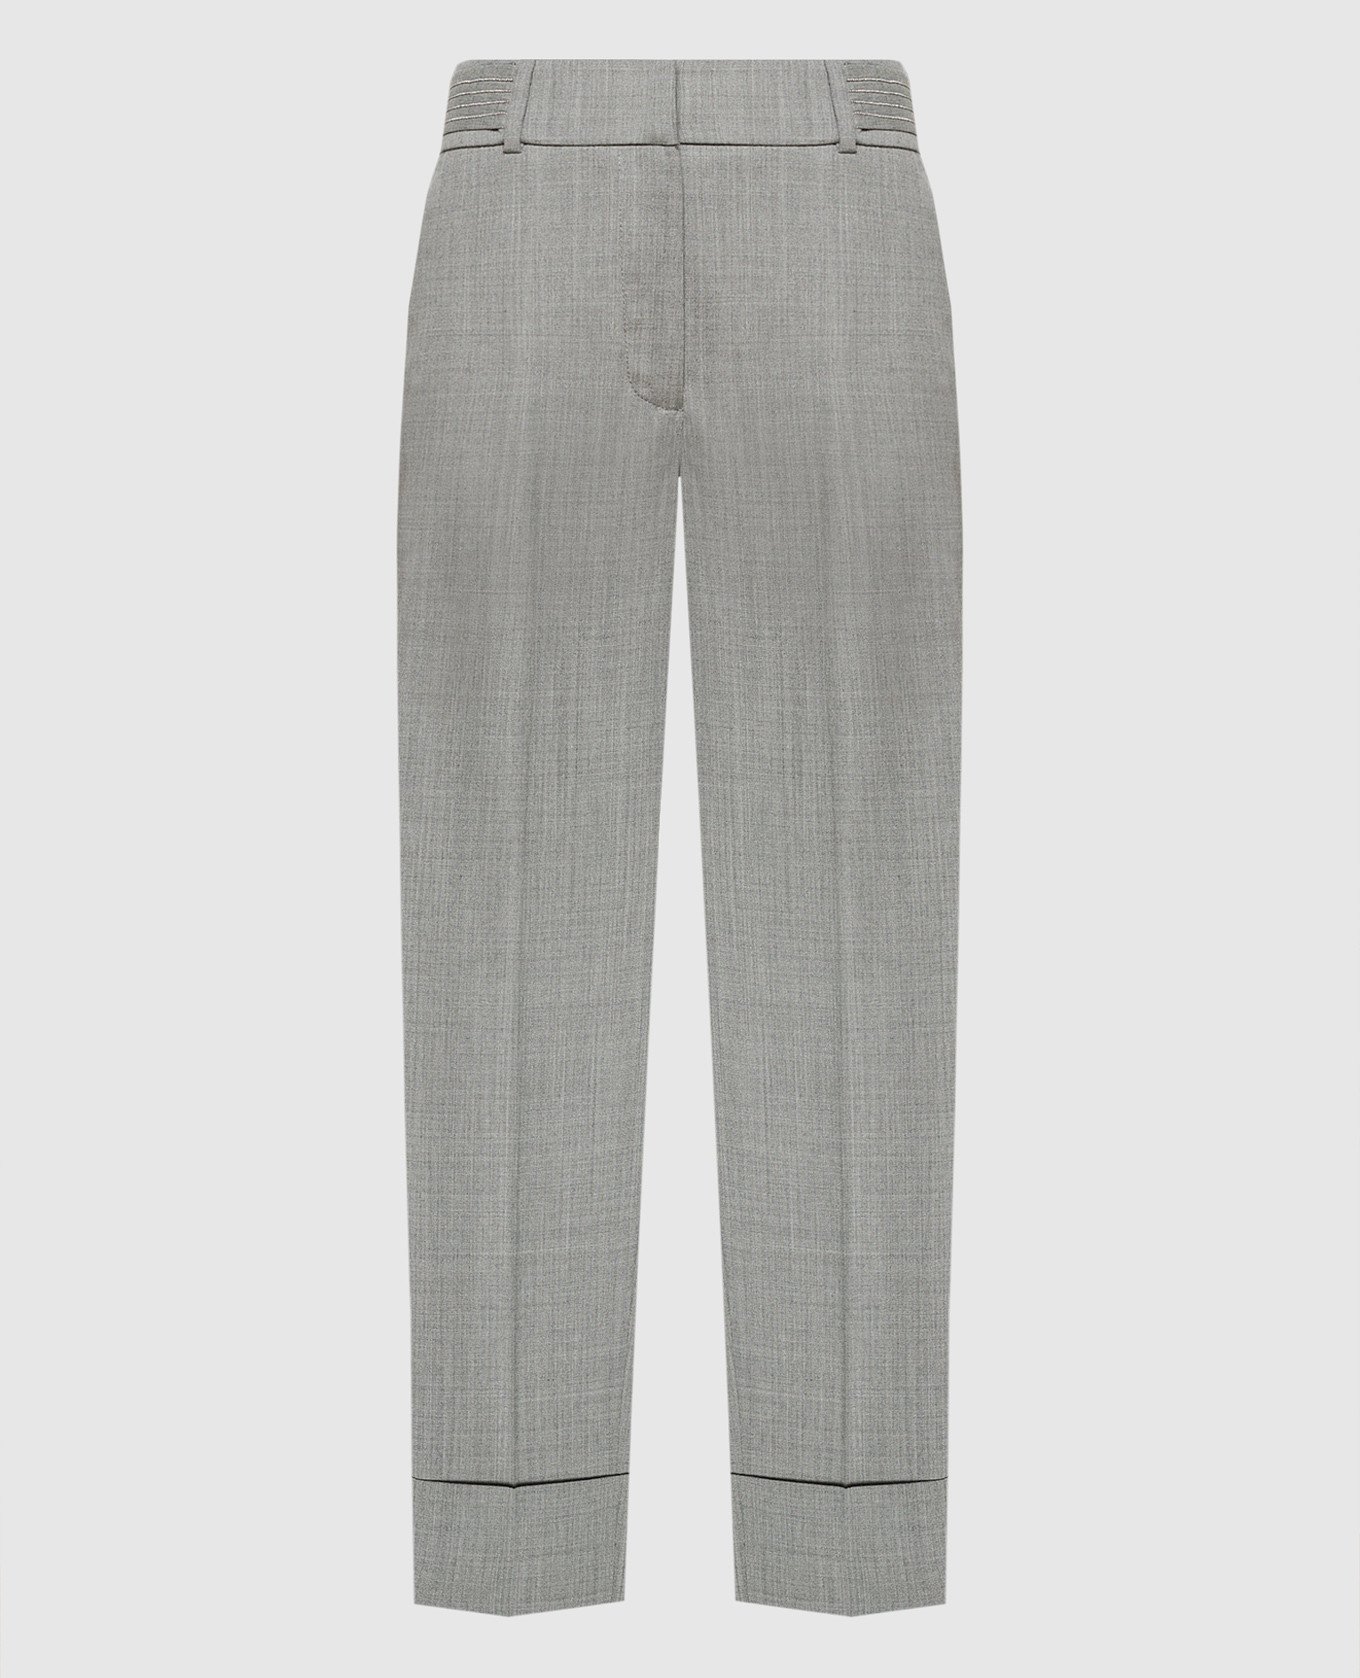 Gray pants with monil chain